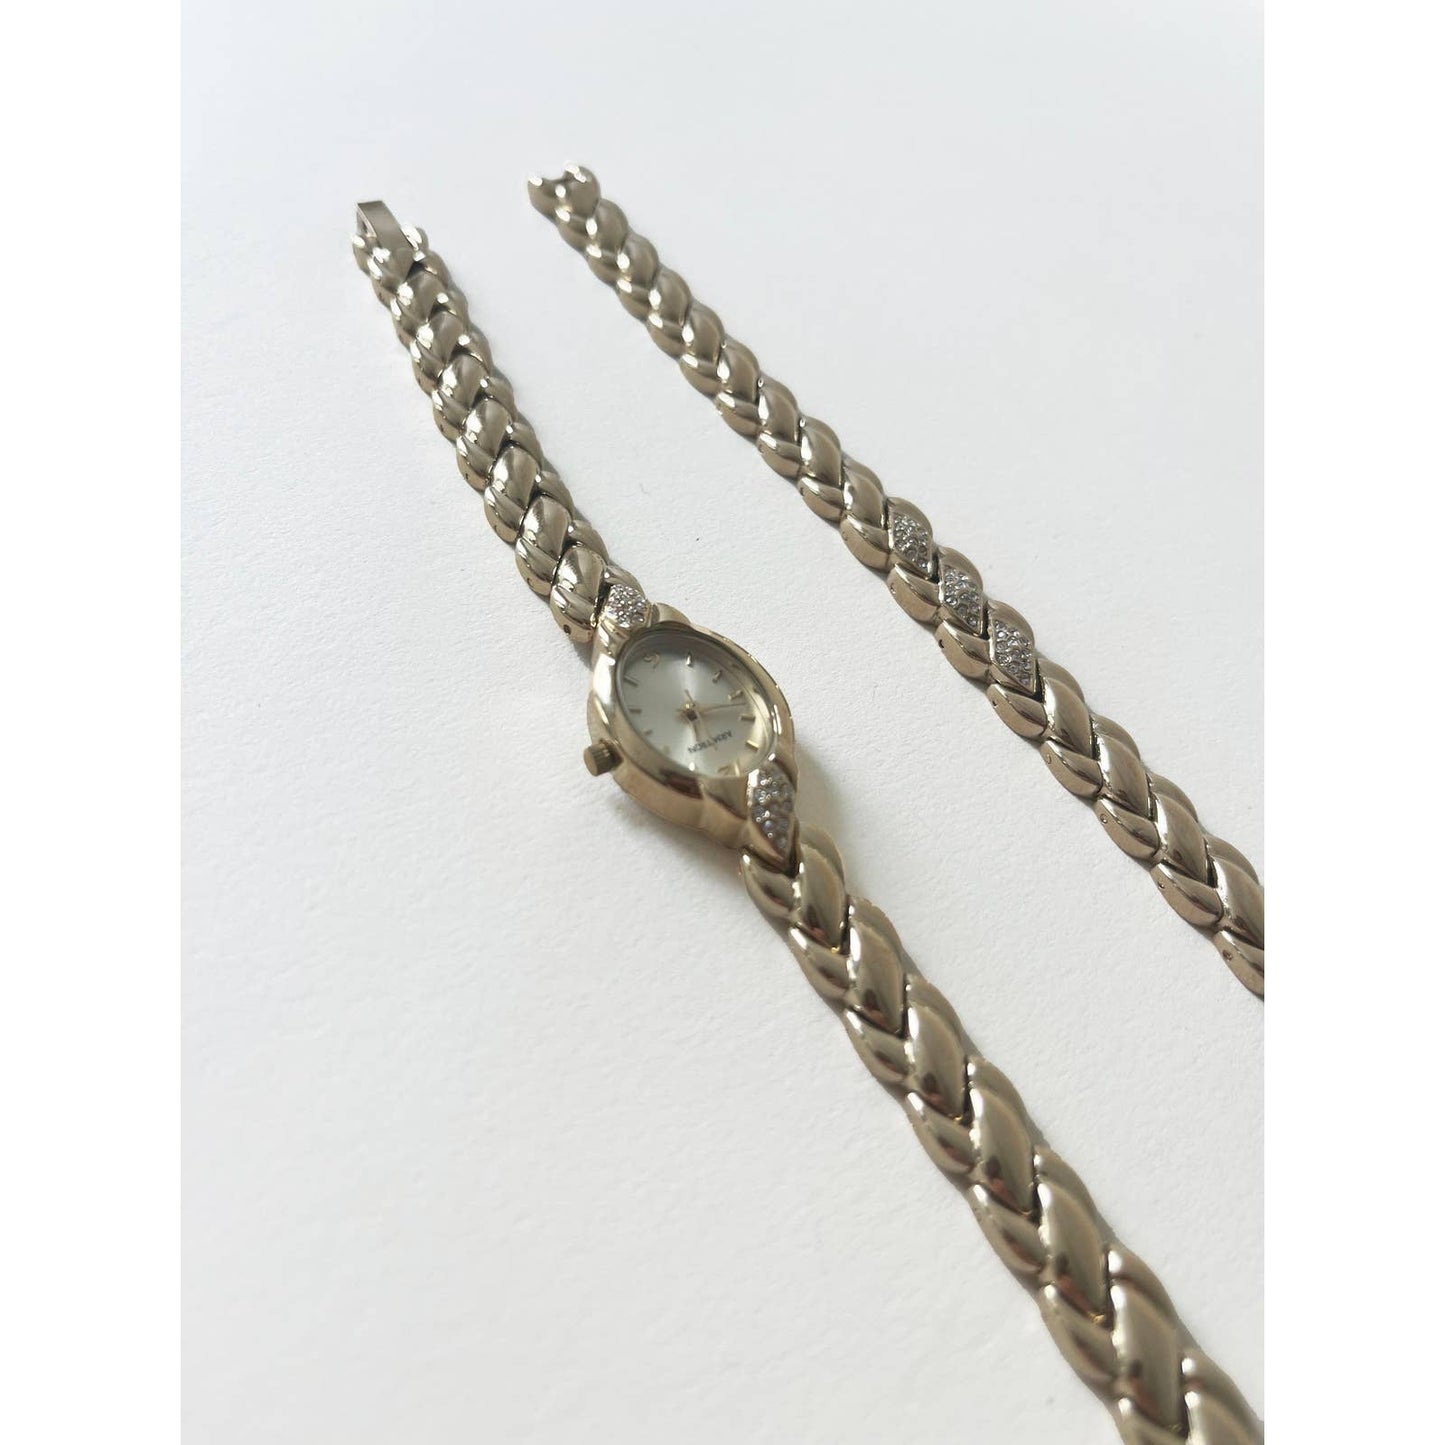 Watch Necklace | Vintage Watch Choker or Bracelet